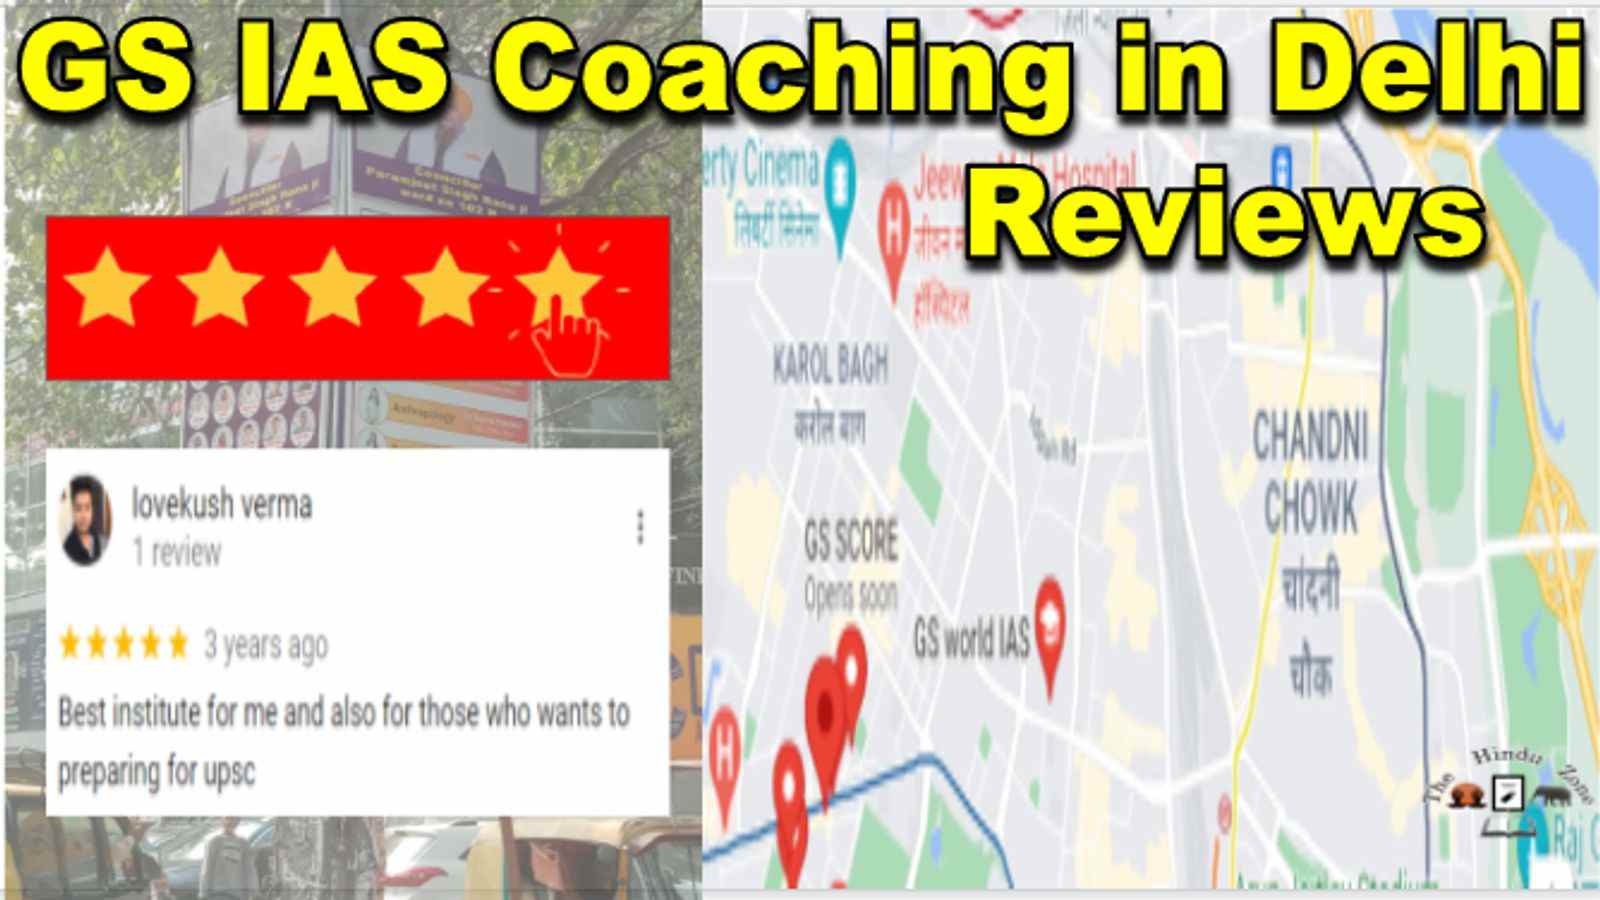 G.S IAS Coaching in Delhi Reviews